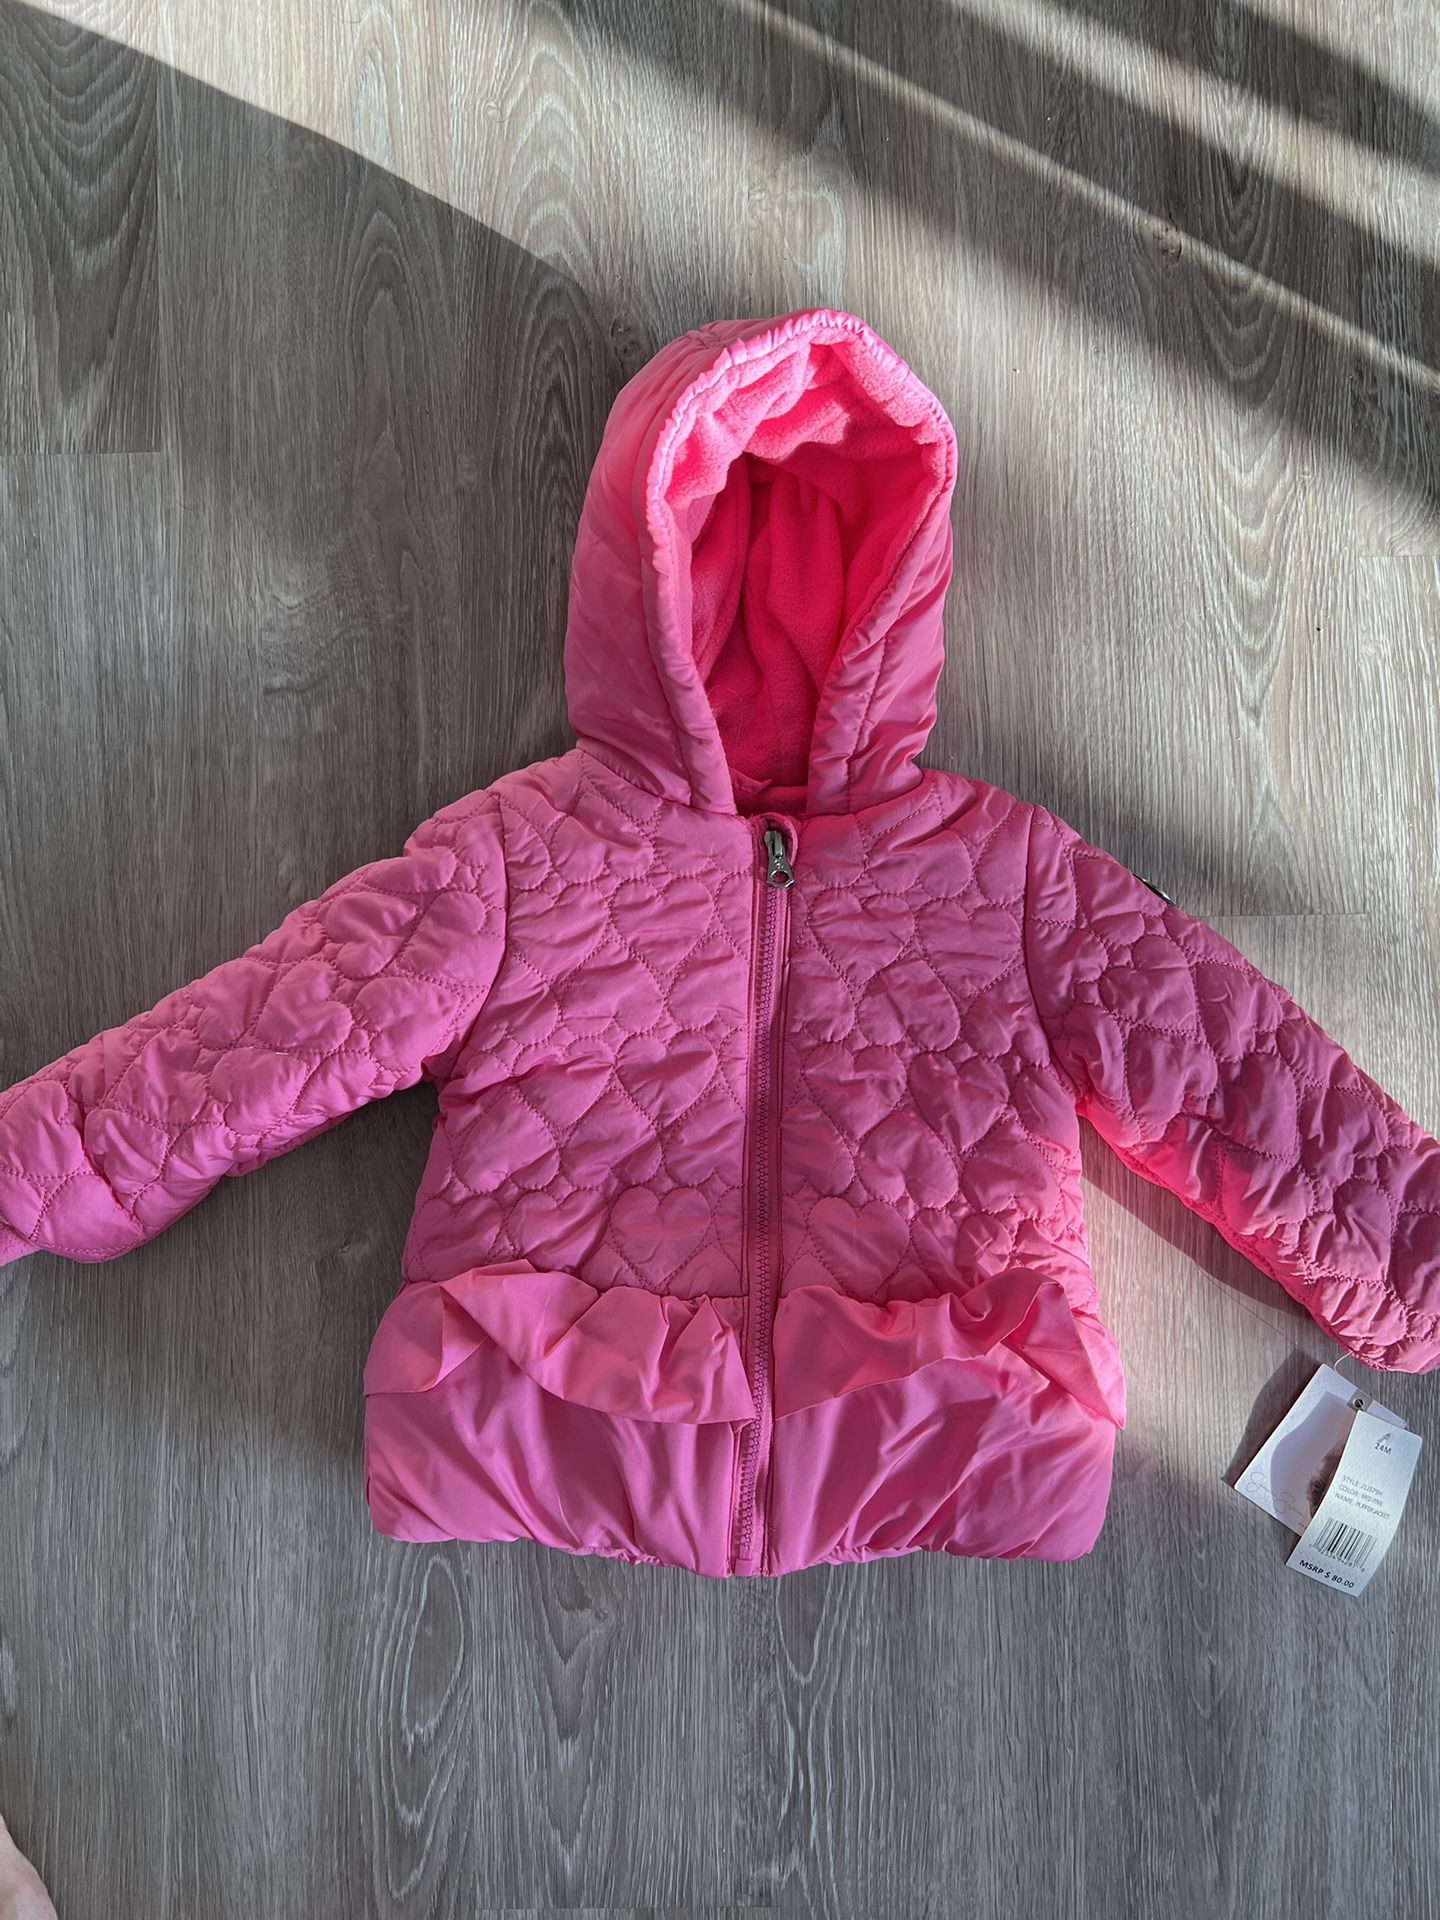 Jessica Simpson 24 month pink jacket 